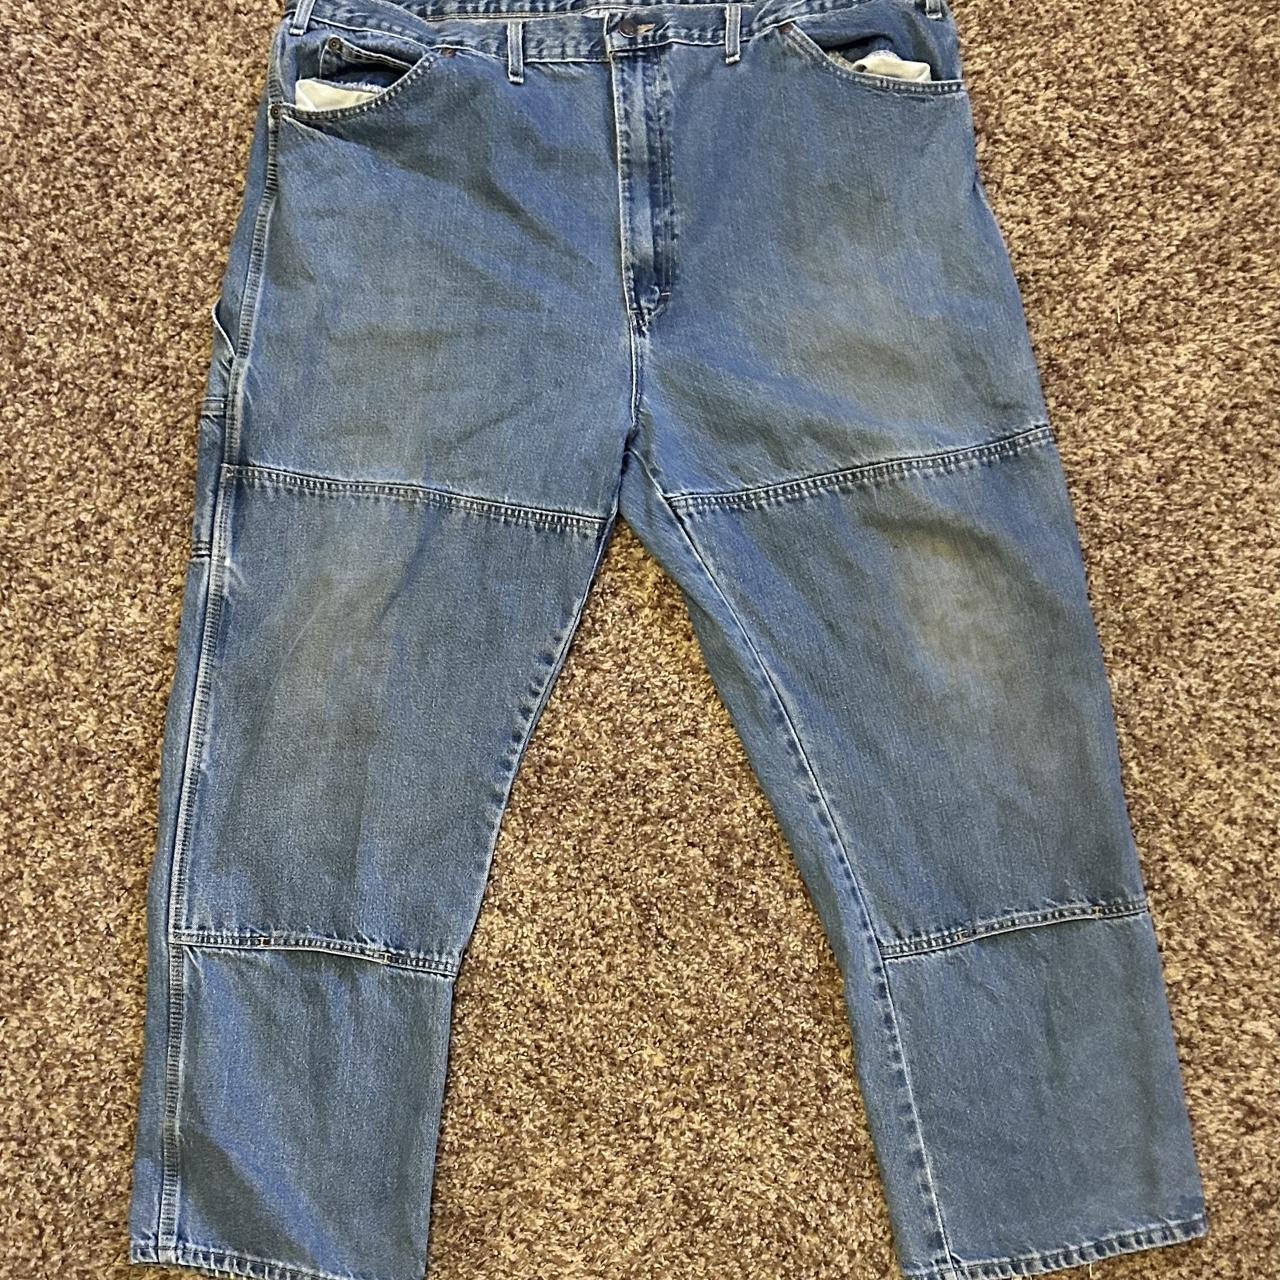 Vintage dickies double knee carpenter jeans Size... - Depop